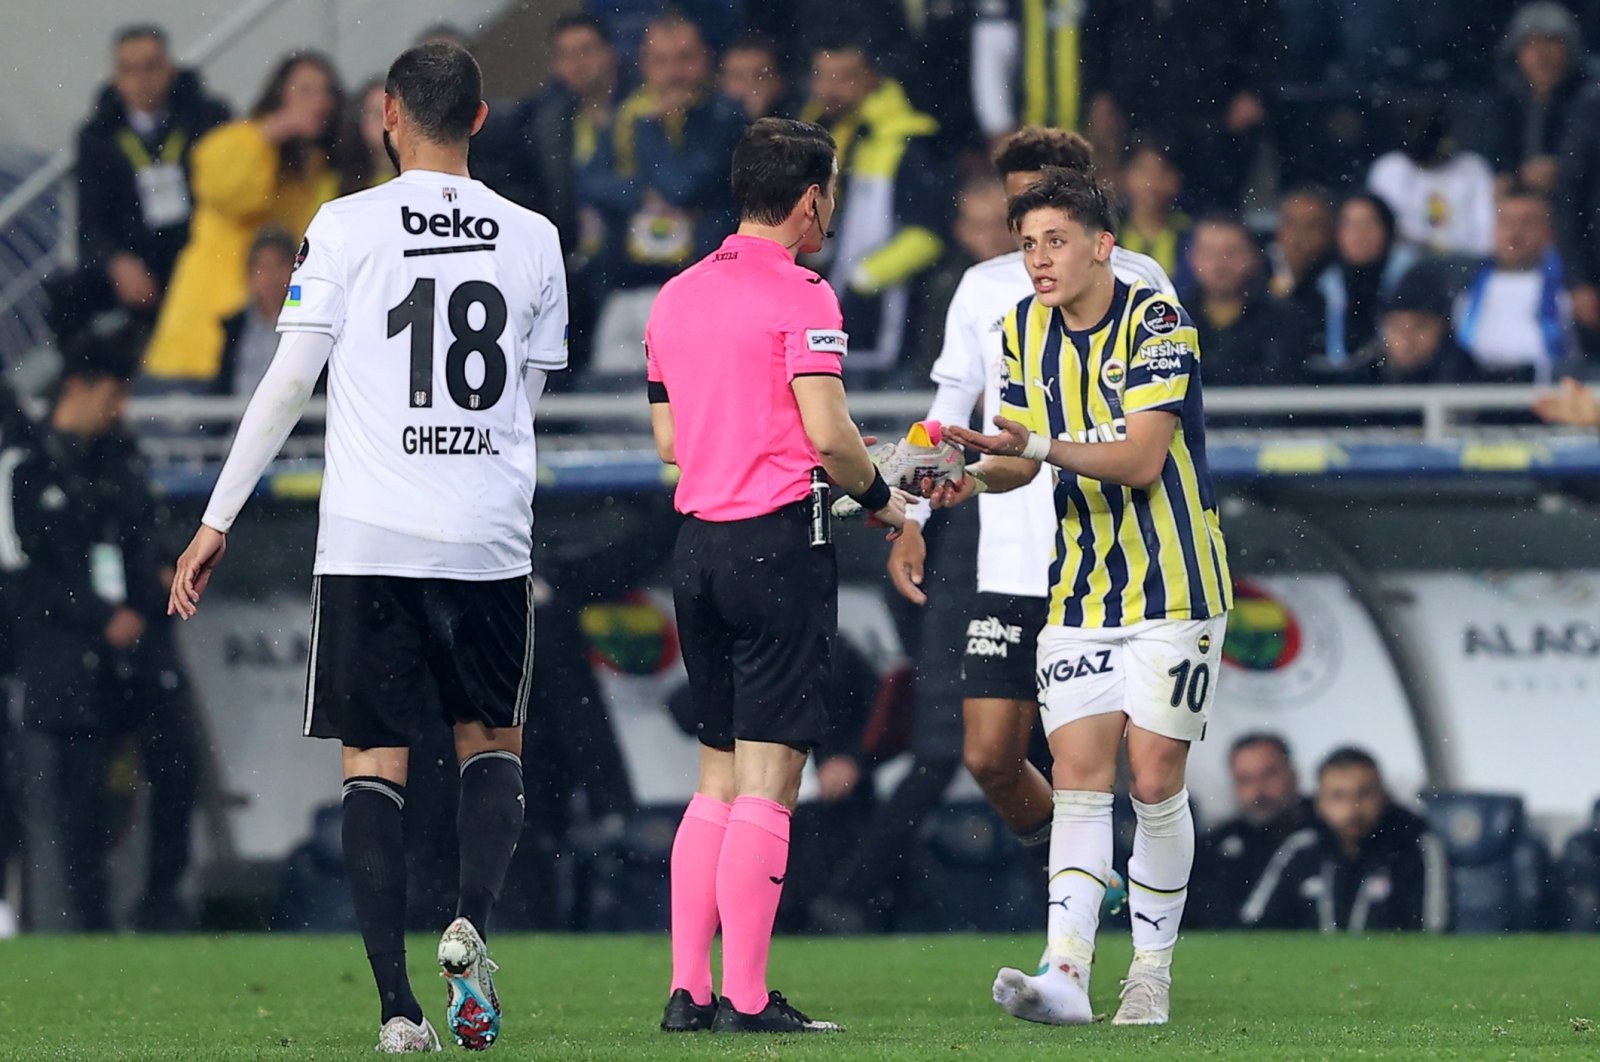 Güler dari Türkiye menghadapi kritik atas penalti derby Istanbul yang diperdebatkan